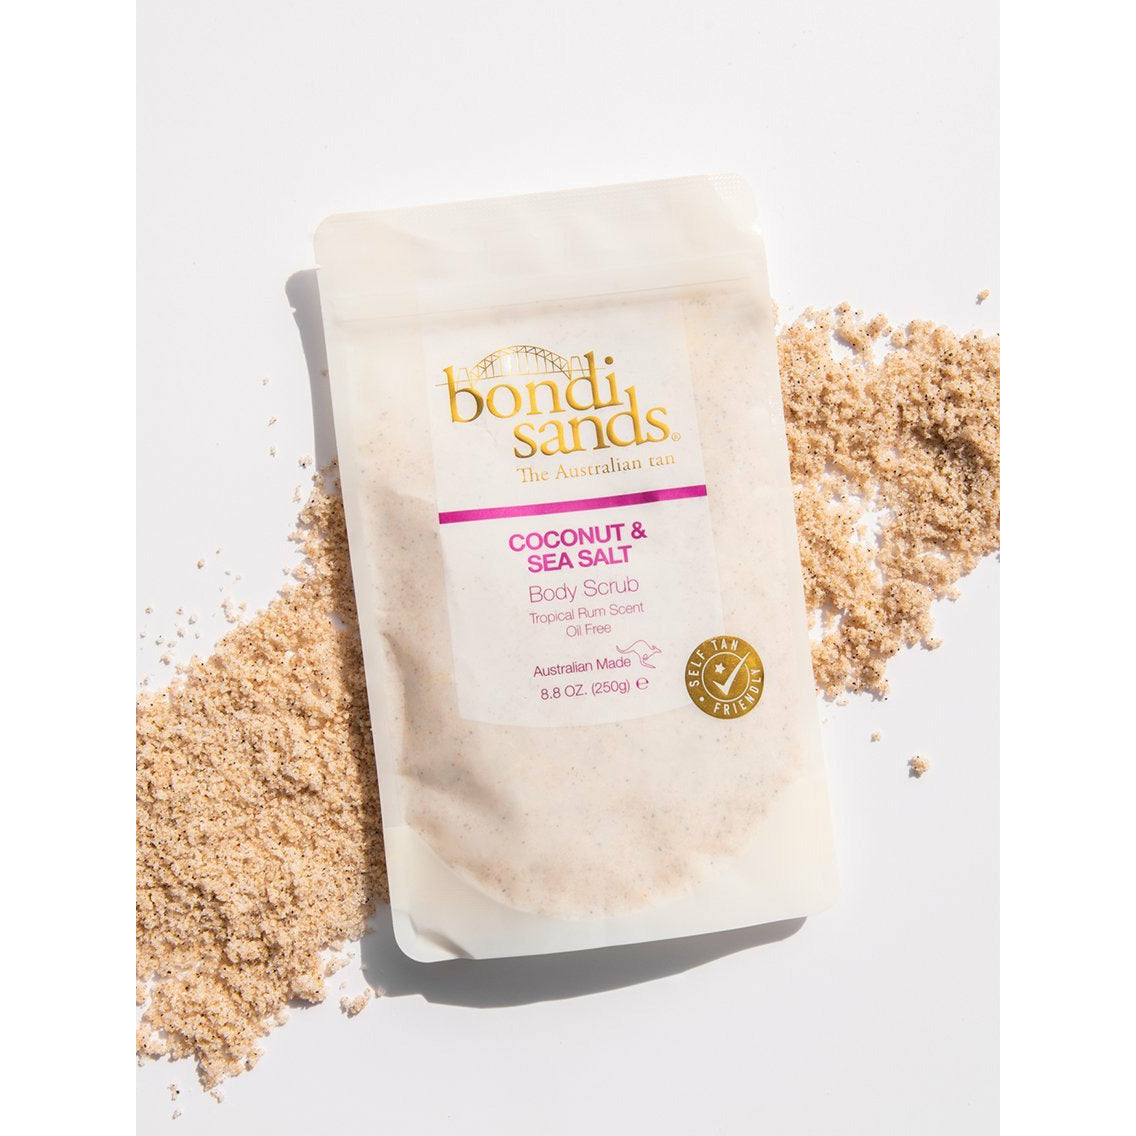 Bondi Sands - Tropical Rum Coconut & Sea Salt Body Scrub Bondi Sands